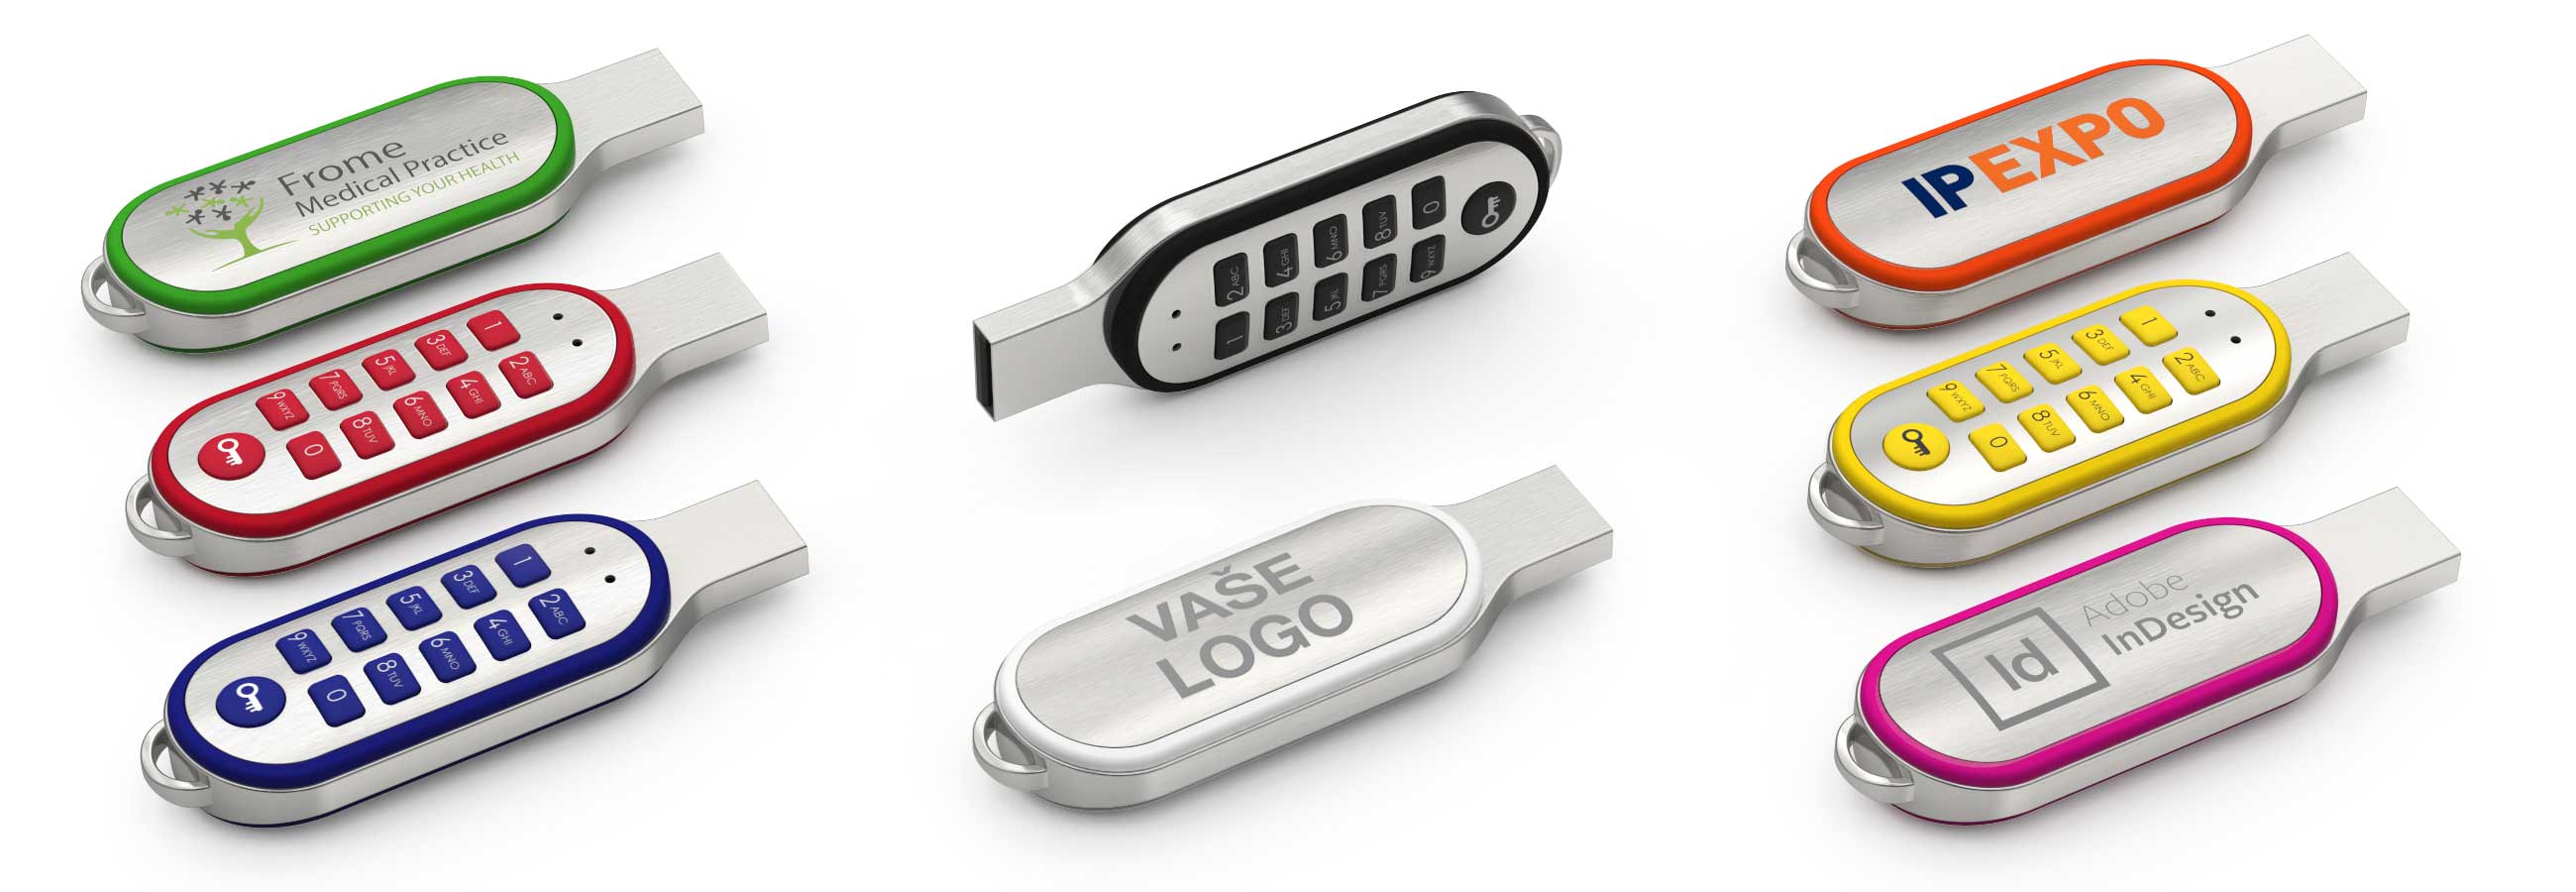 Code USB flash disk